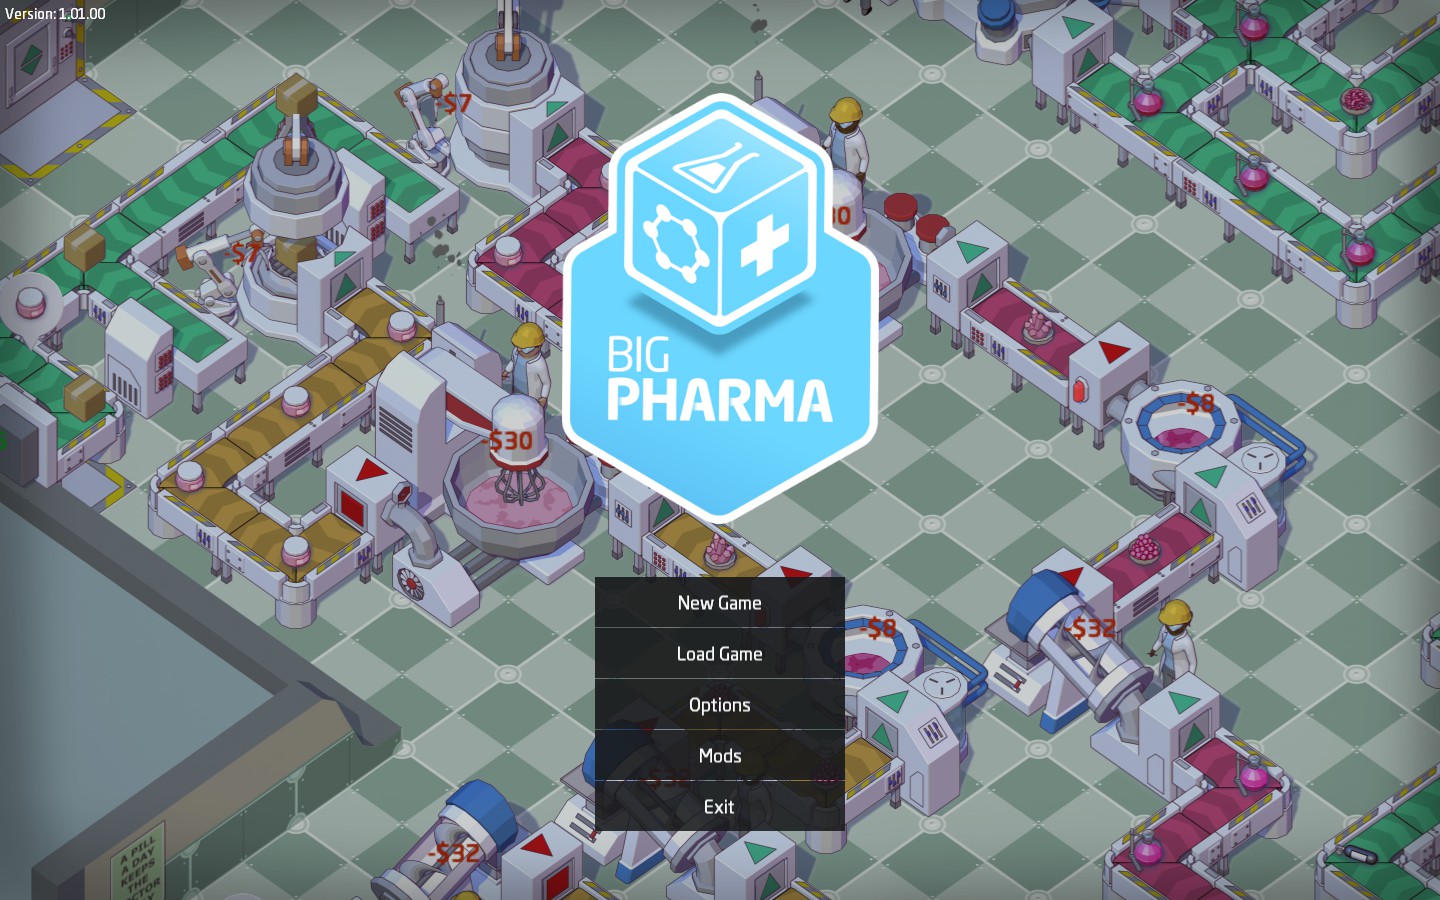 Review: Big Pharma